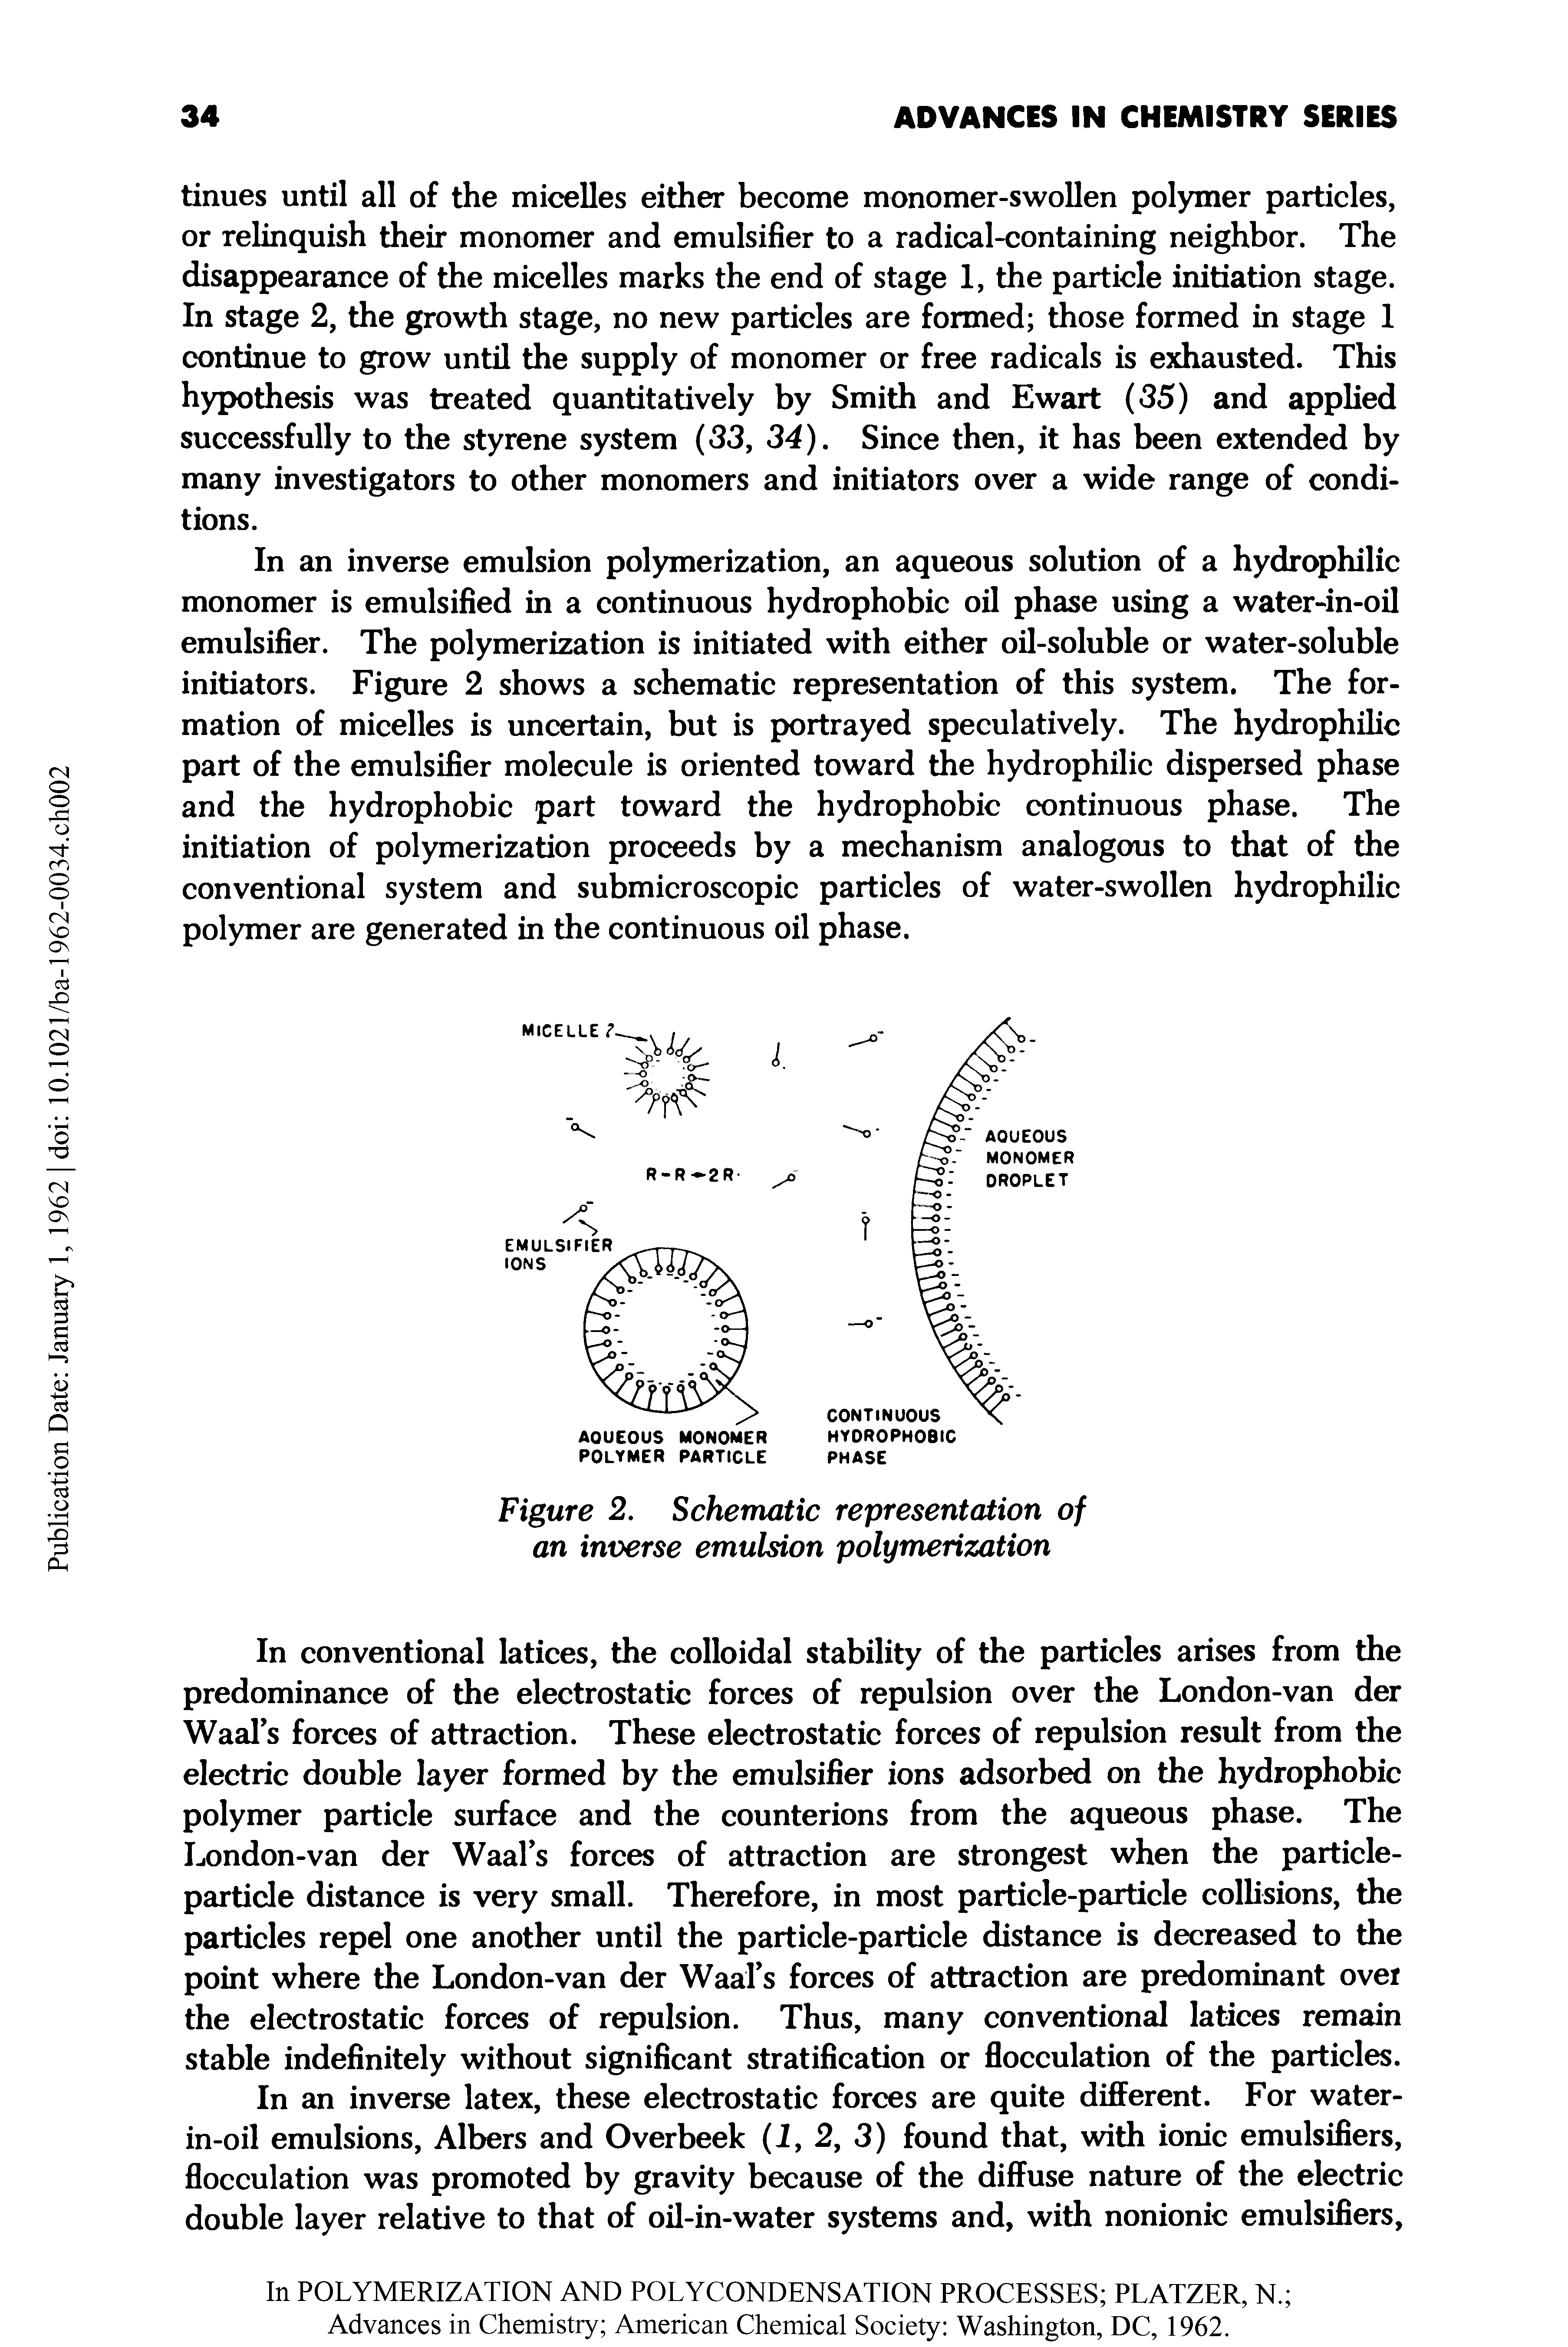 Figure 2. Schematic representation of an inverse emulsion polymerization...